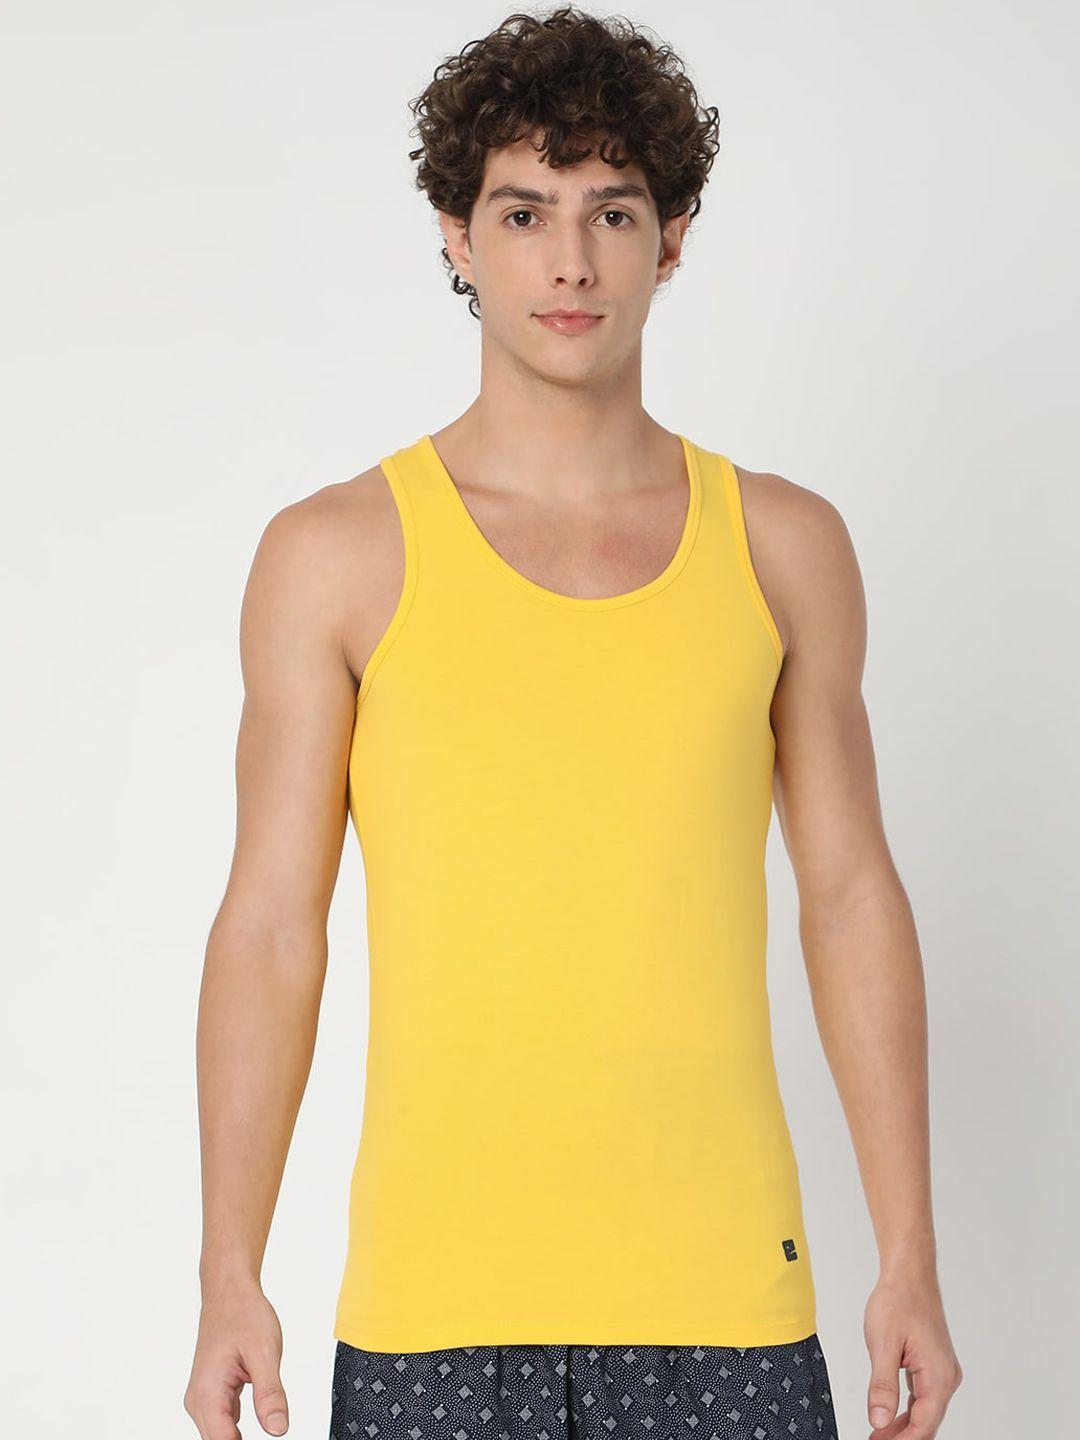 underjeans-by-spykar-men-yellow-solid-basic-innerwear-vests